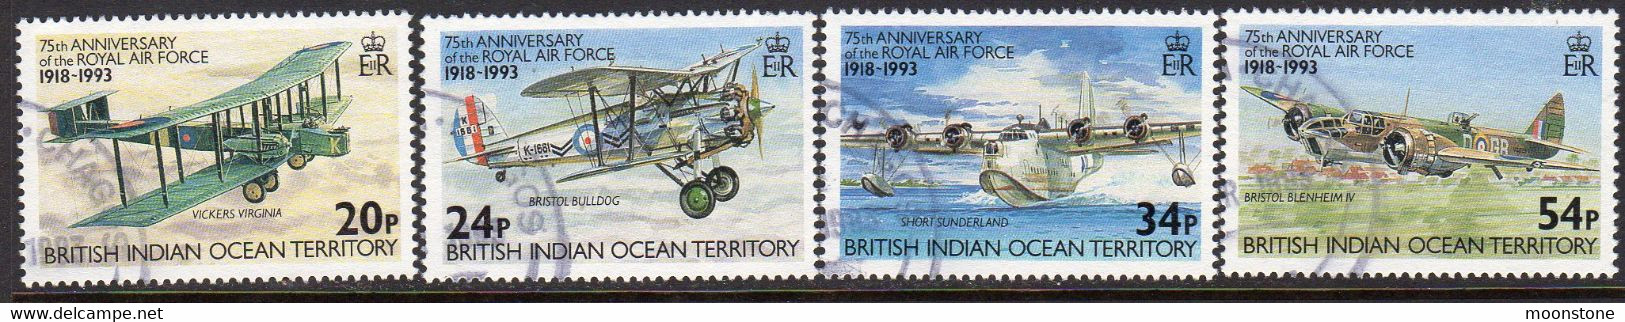 British Indian Ocean Territory BIOT 1993 75th Anniversary Of The RAF Set Of 4, Used, SG 136/9 (A) - British Indian Ocean Territory (BIOT)